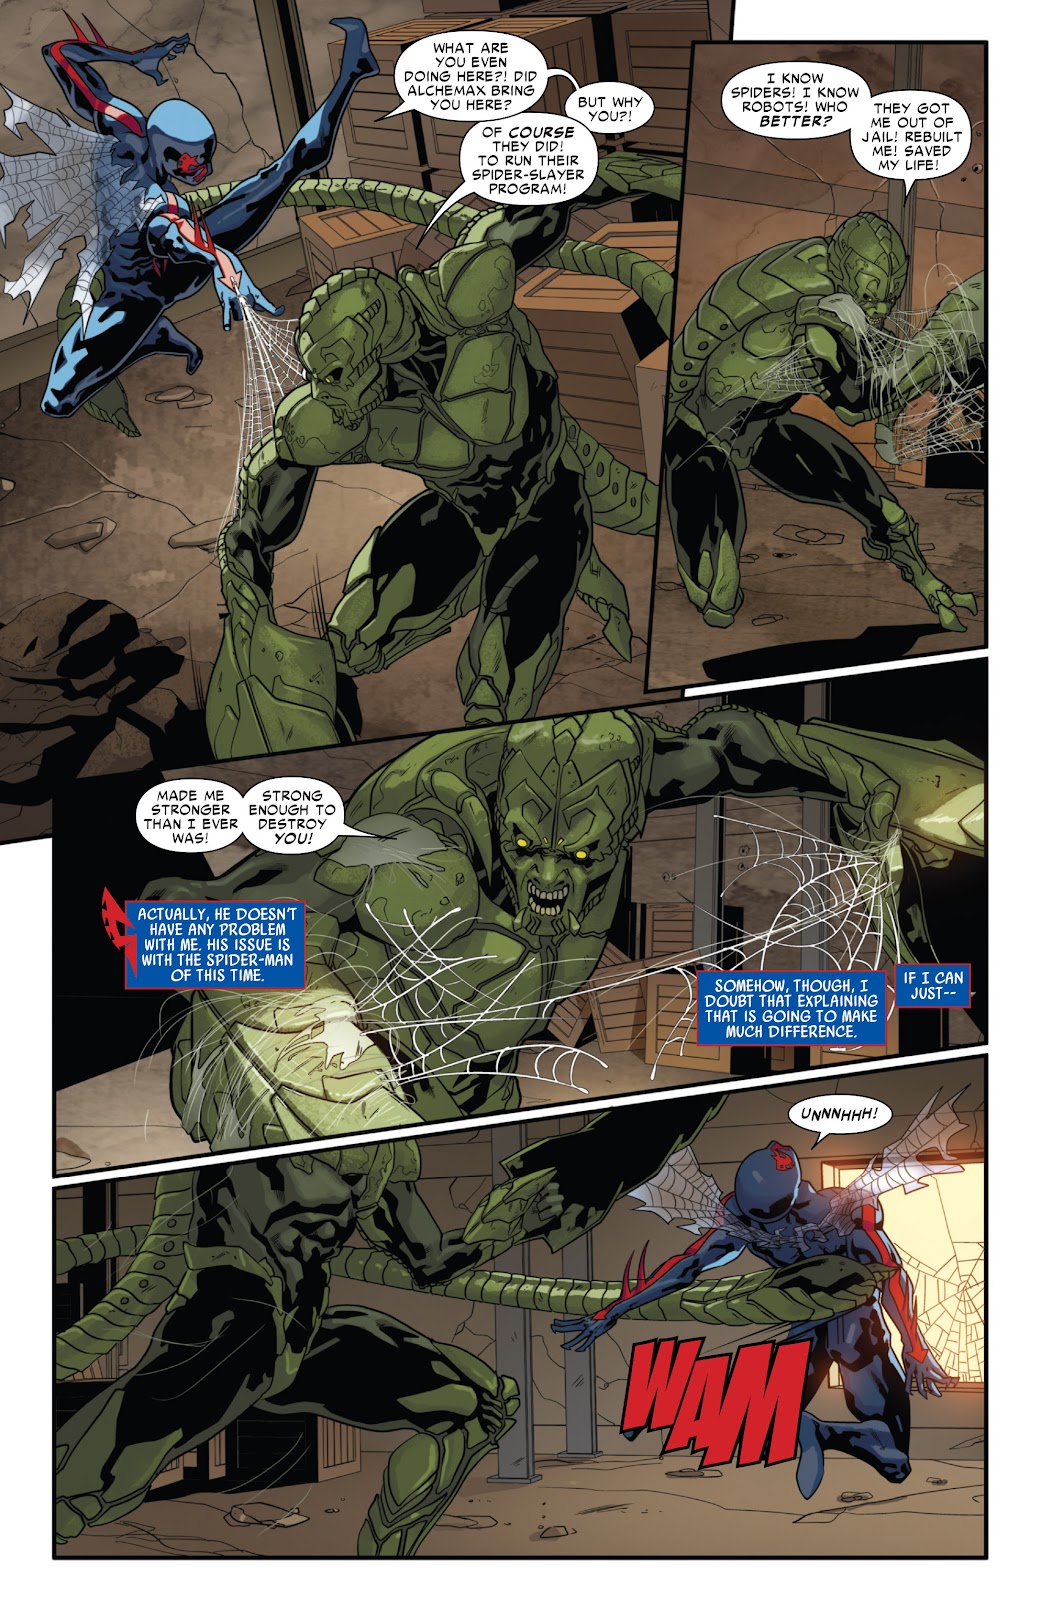 Spider-Man 2099 (2014) issue 4 - Page 4